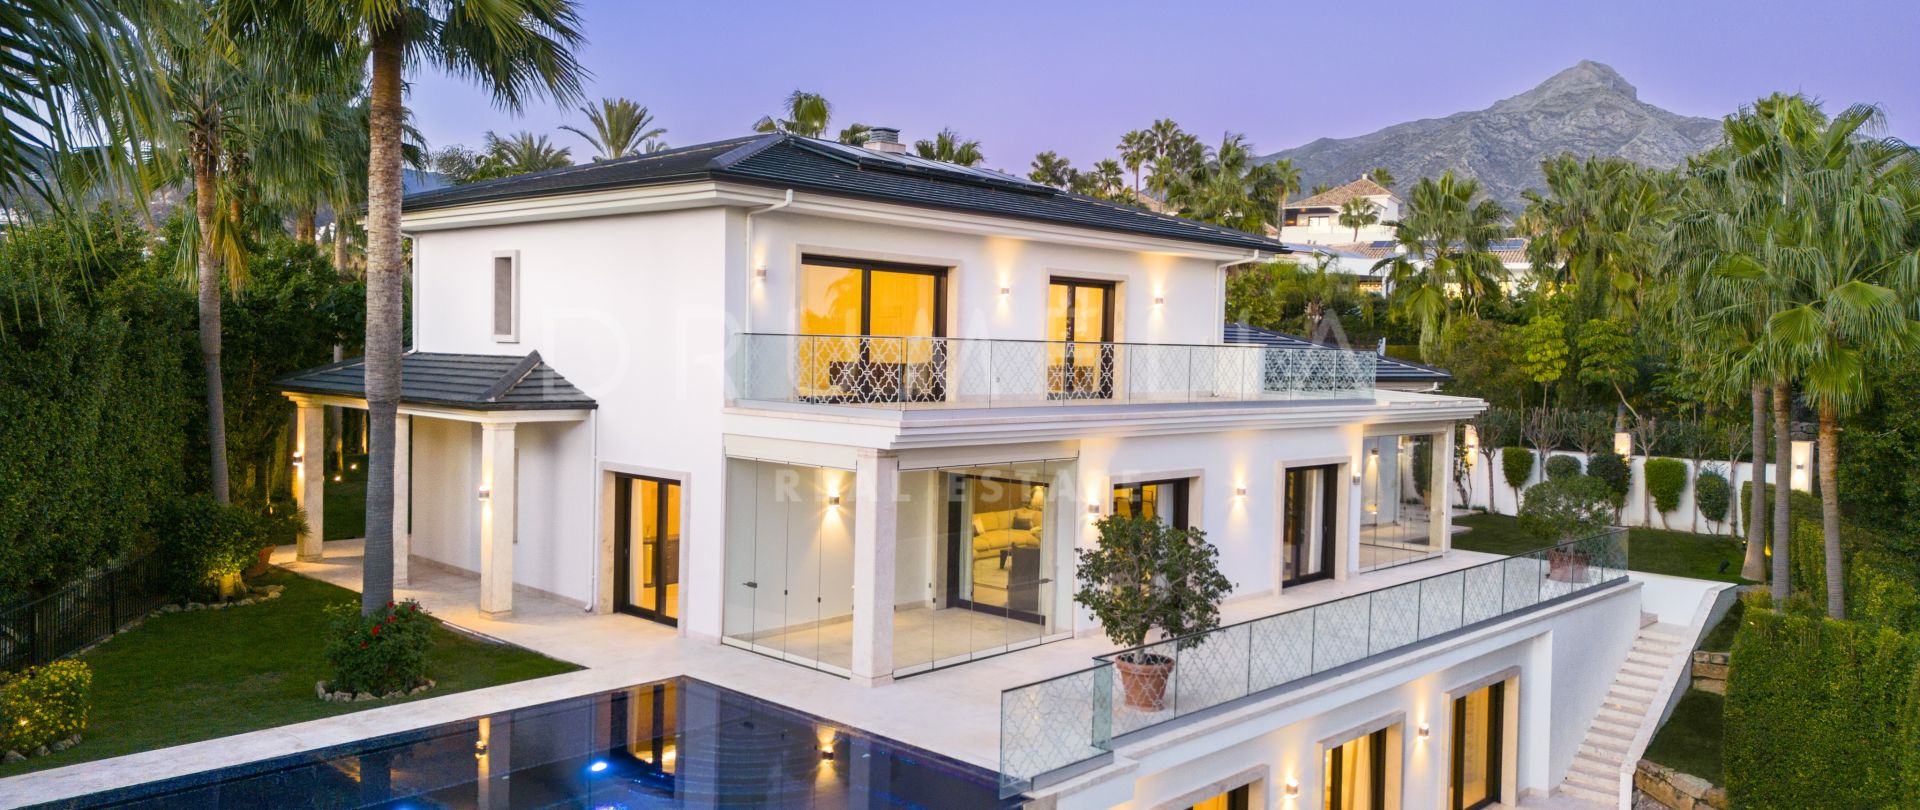 Elegant frontline golf modern luxury villa with panoramic views in Nueva Andalucia, Marbella